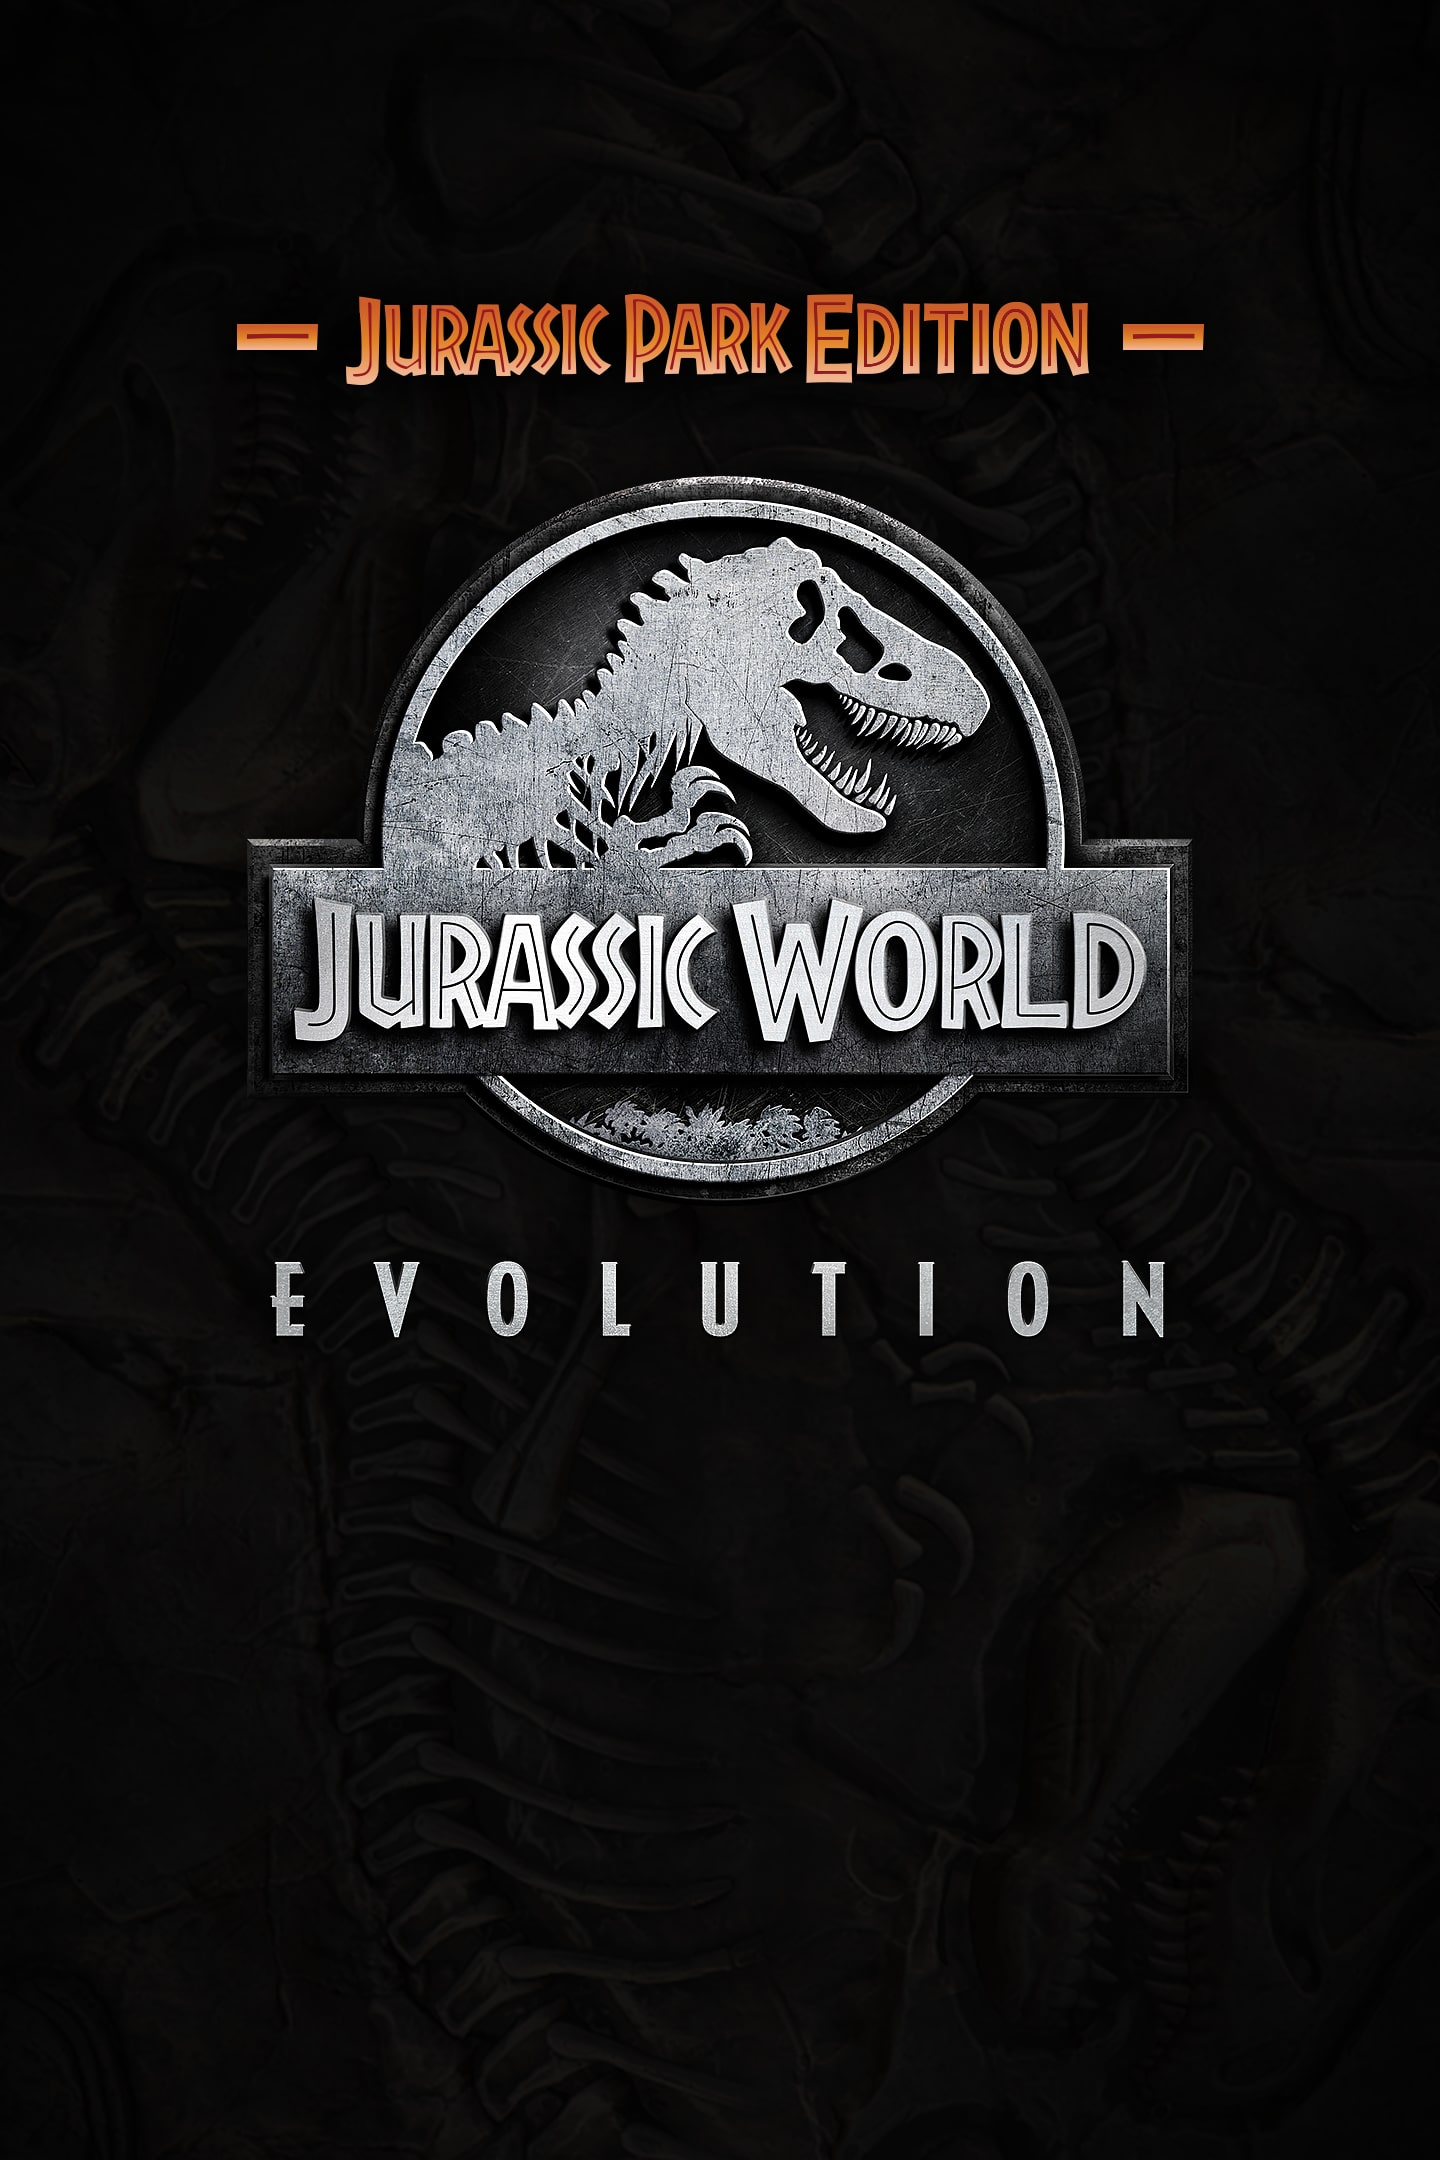 Jurassic World Evolution - PS4 - Game Games - Loja de Games Online